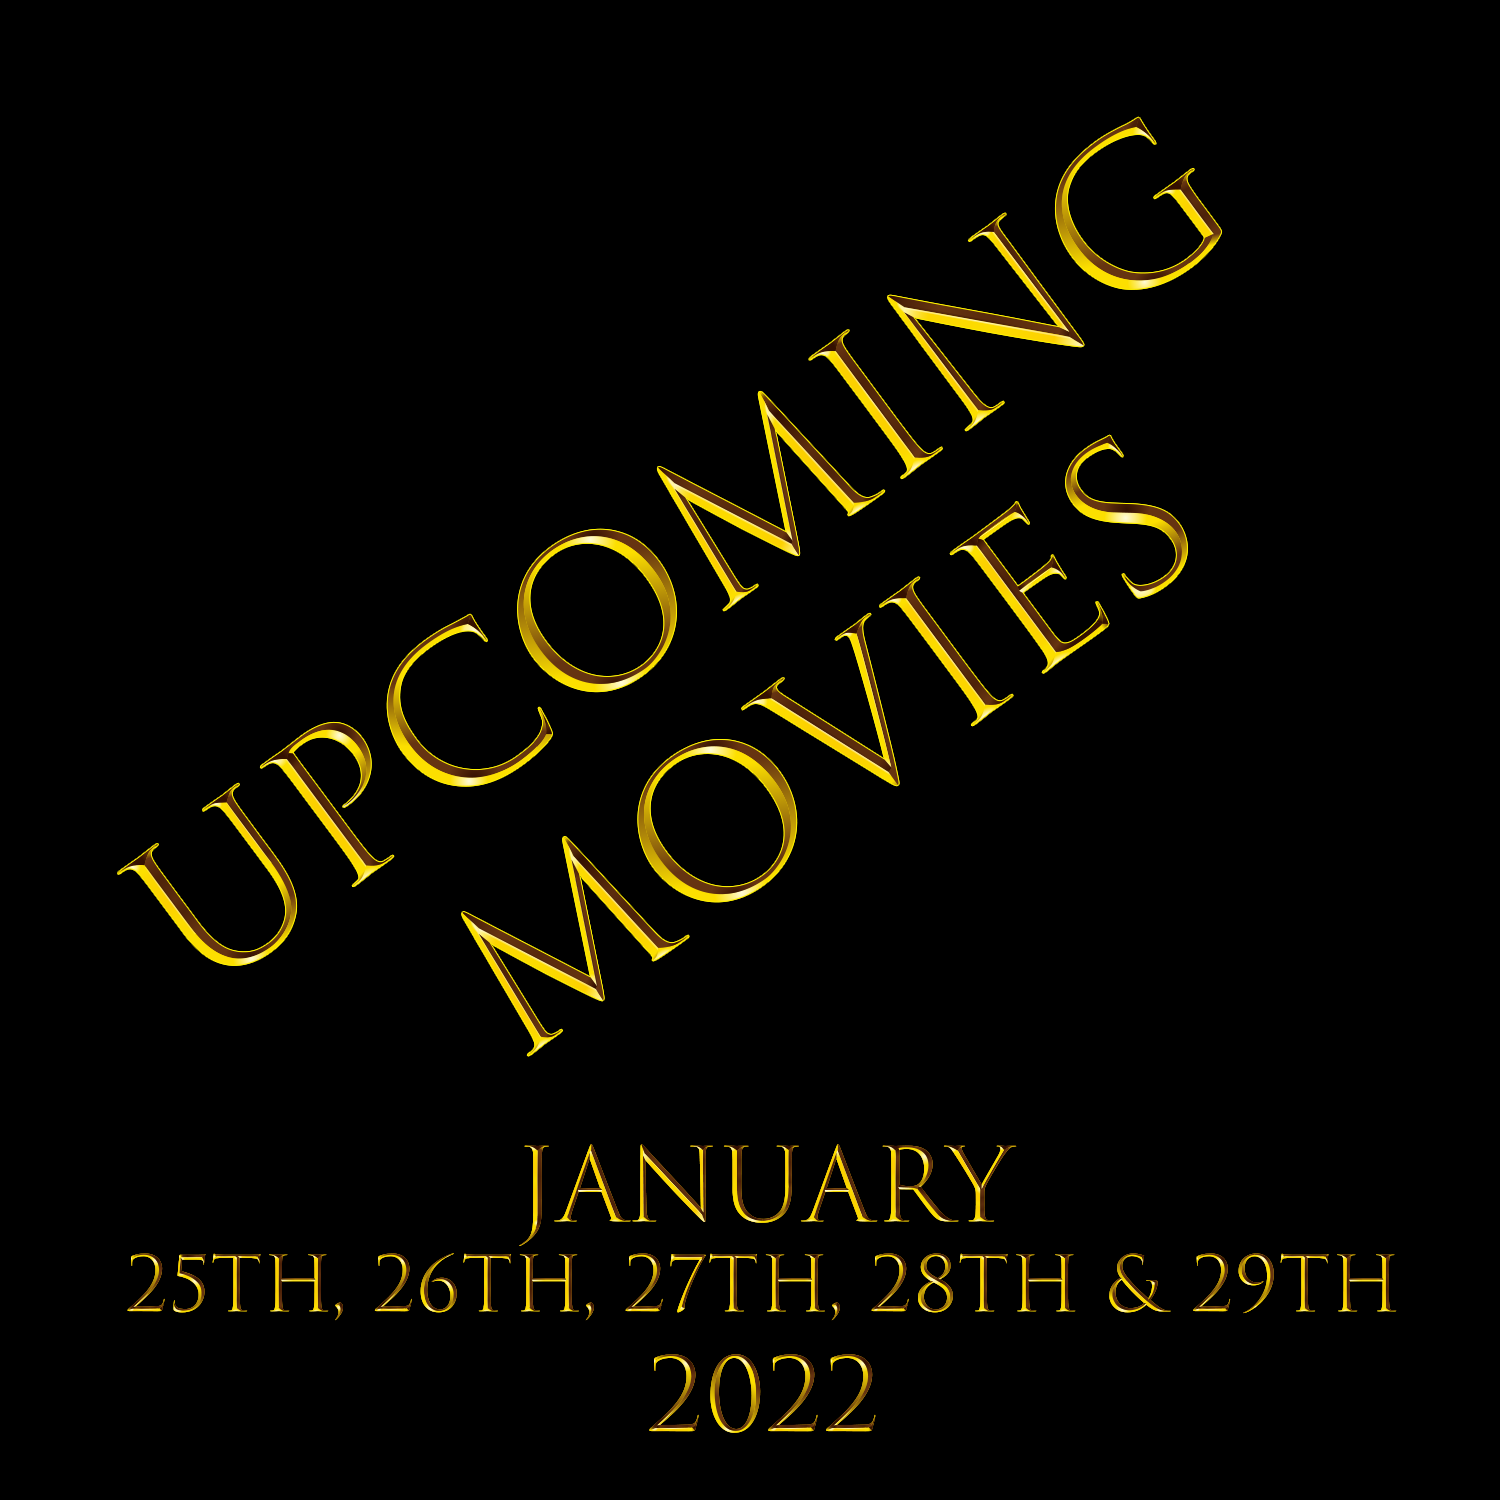 Upcoming Movies - January 27th, 2022